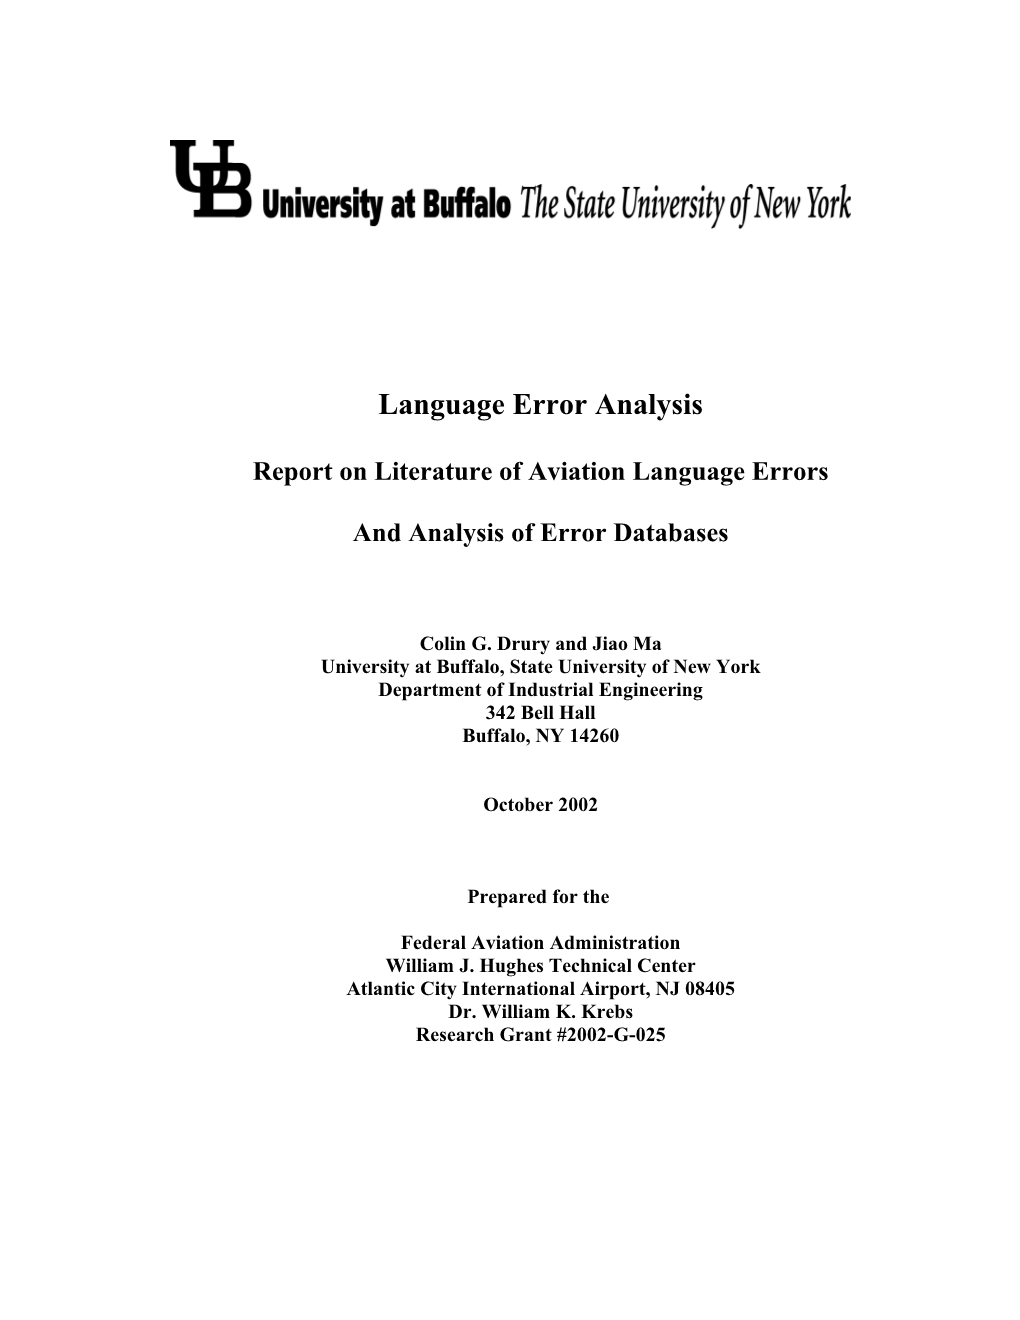 Report on Literature of Aviation Language Errors